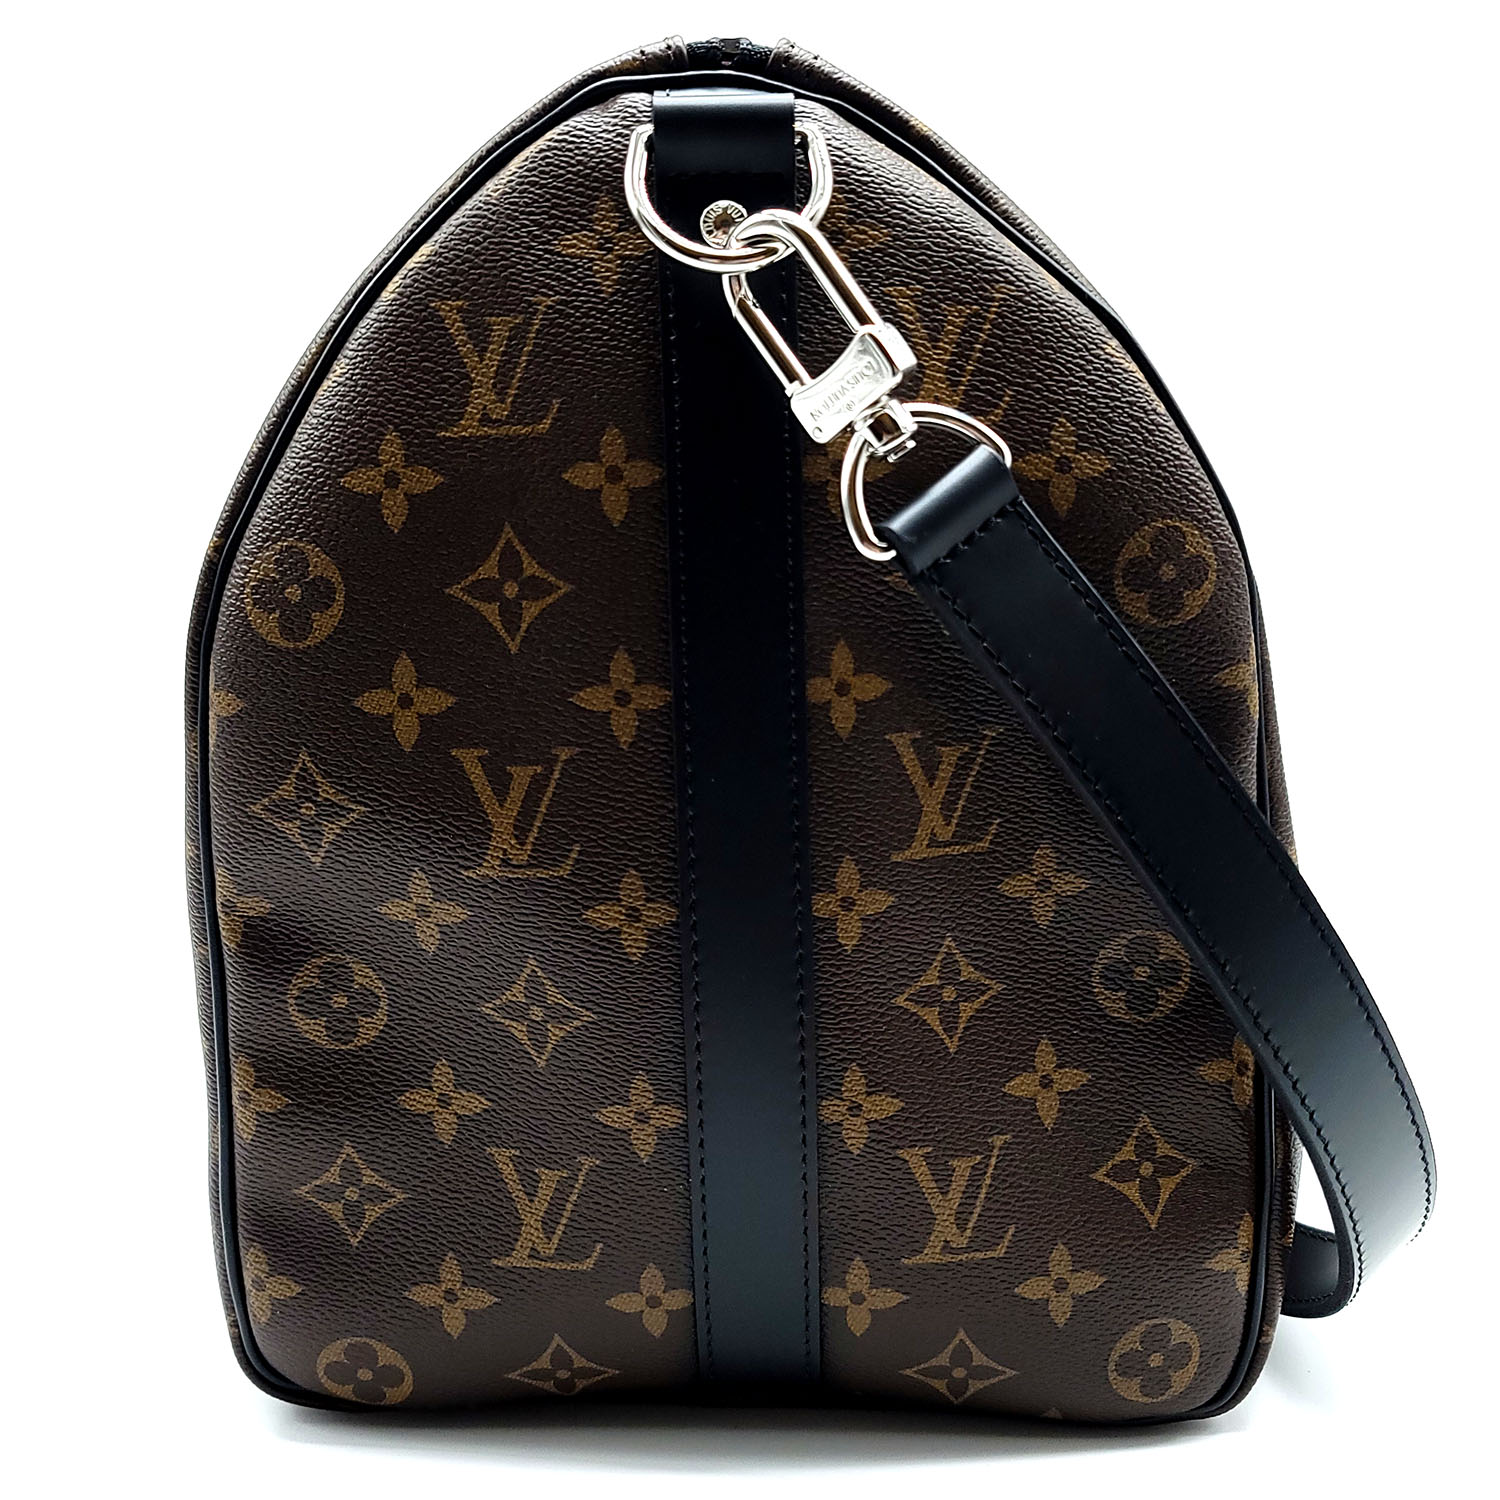 Used Louis Vuitton Monogram Macassar Keepall Bandouliere 45